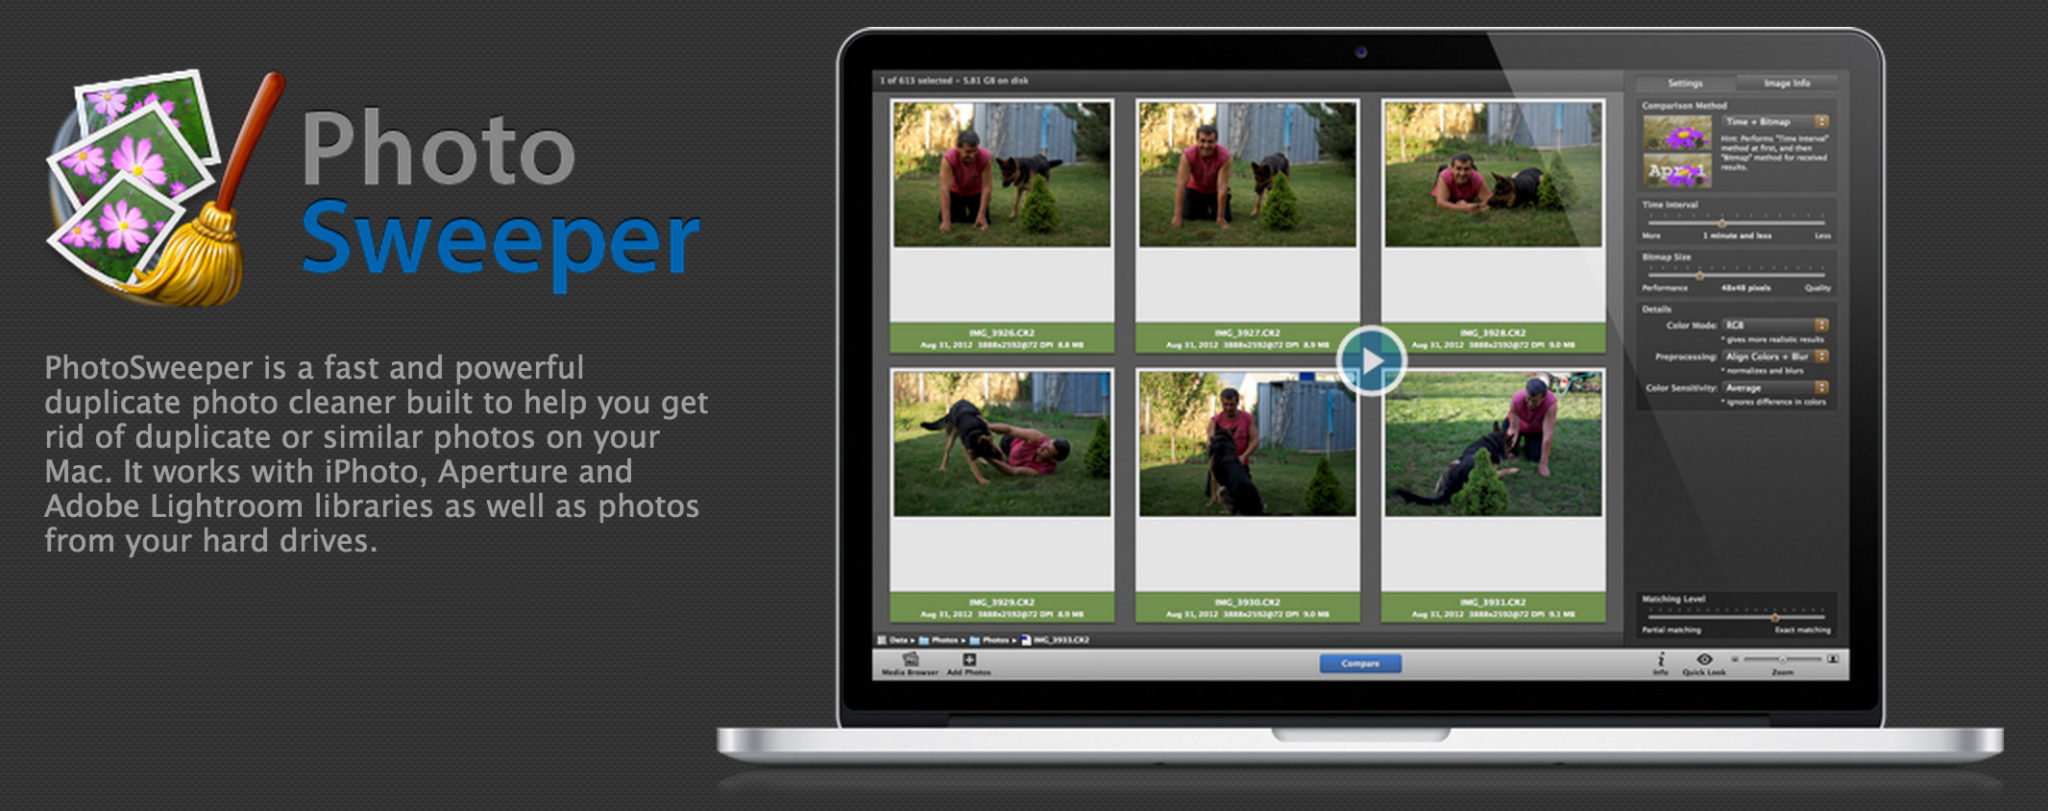 photosweeper mac 2.2.4 torrent